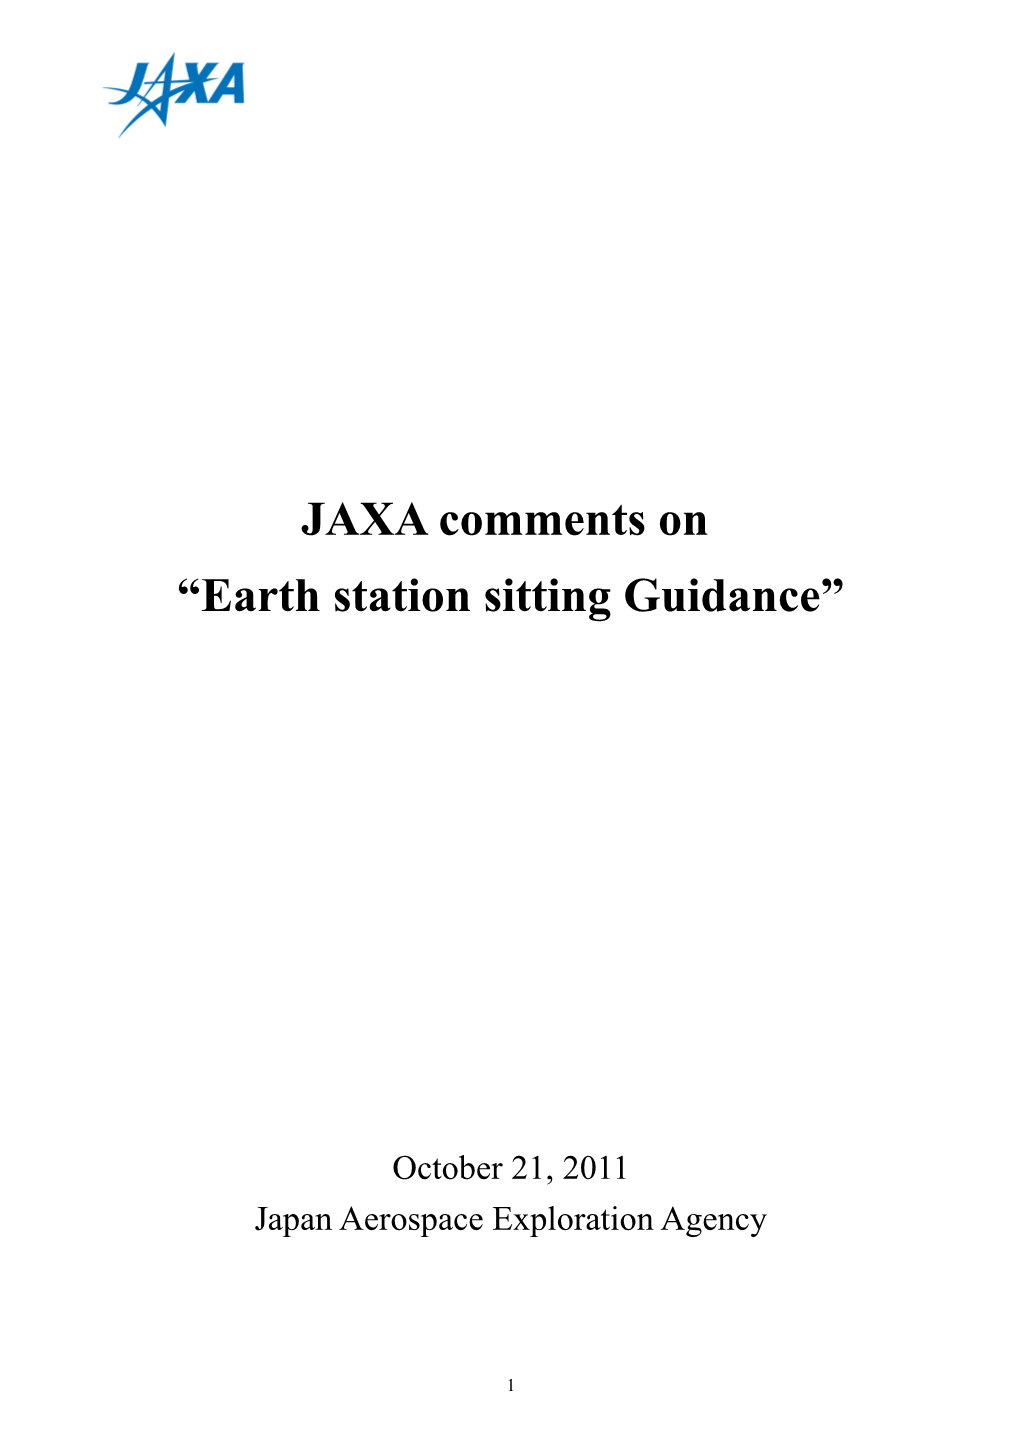 IFC27/2011 - Submission by Japan Aerospace Exploration Agency (JAXA)